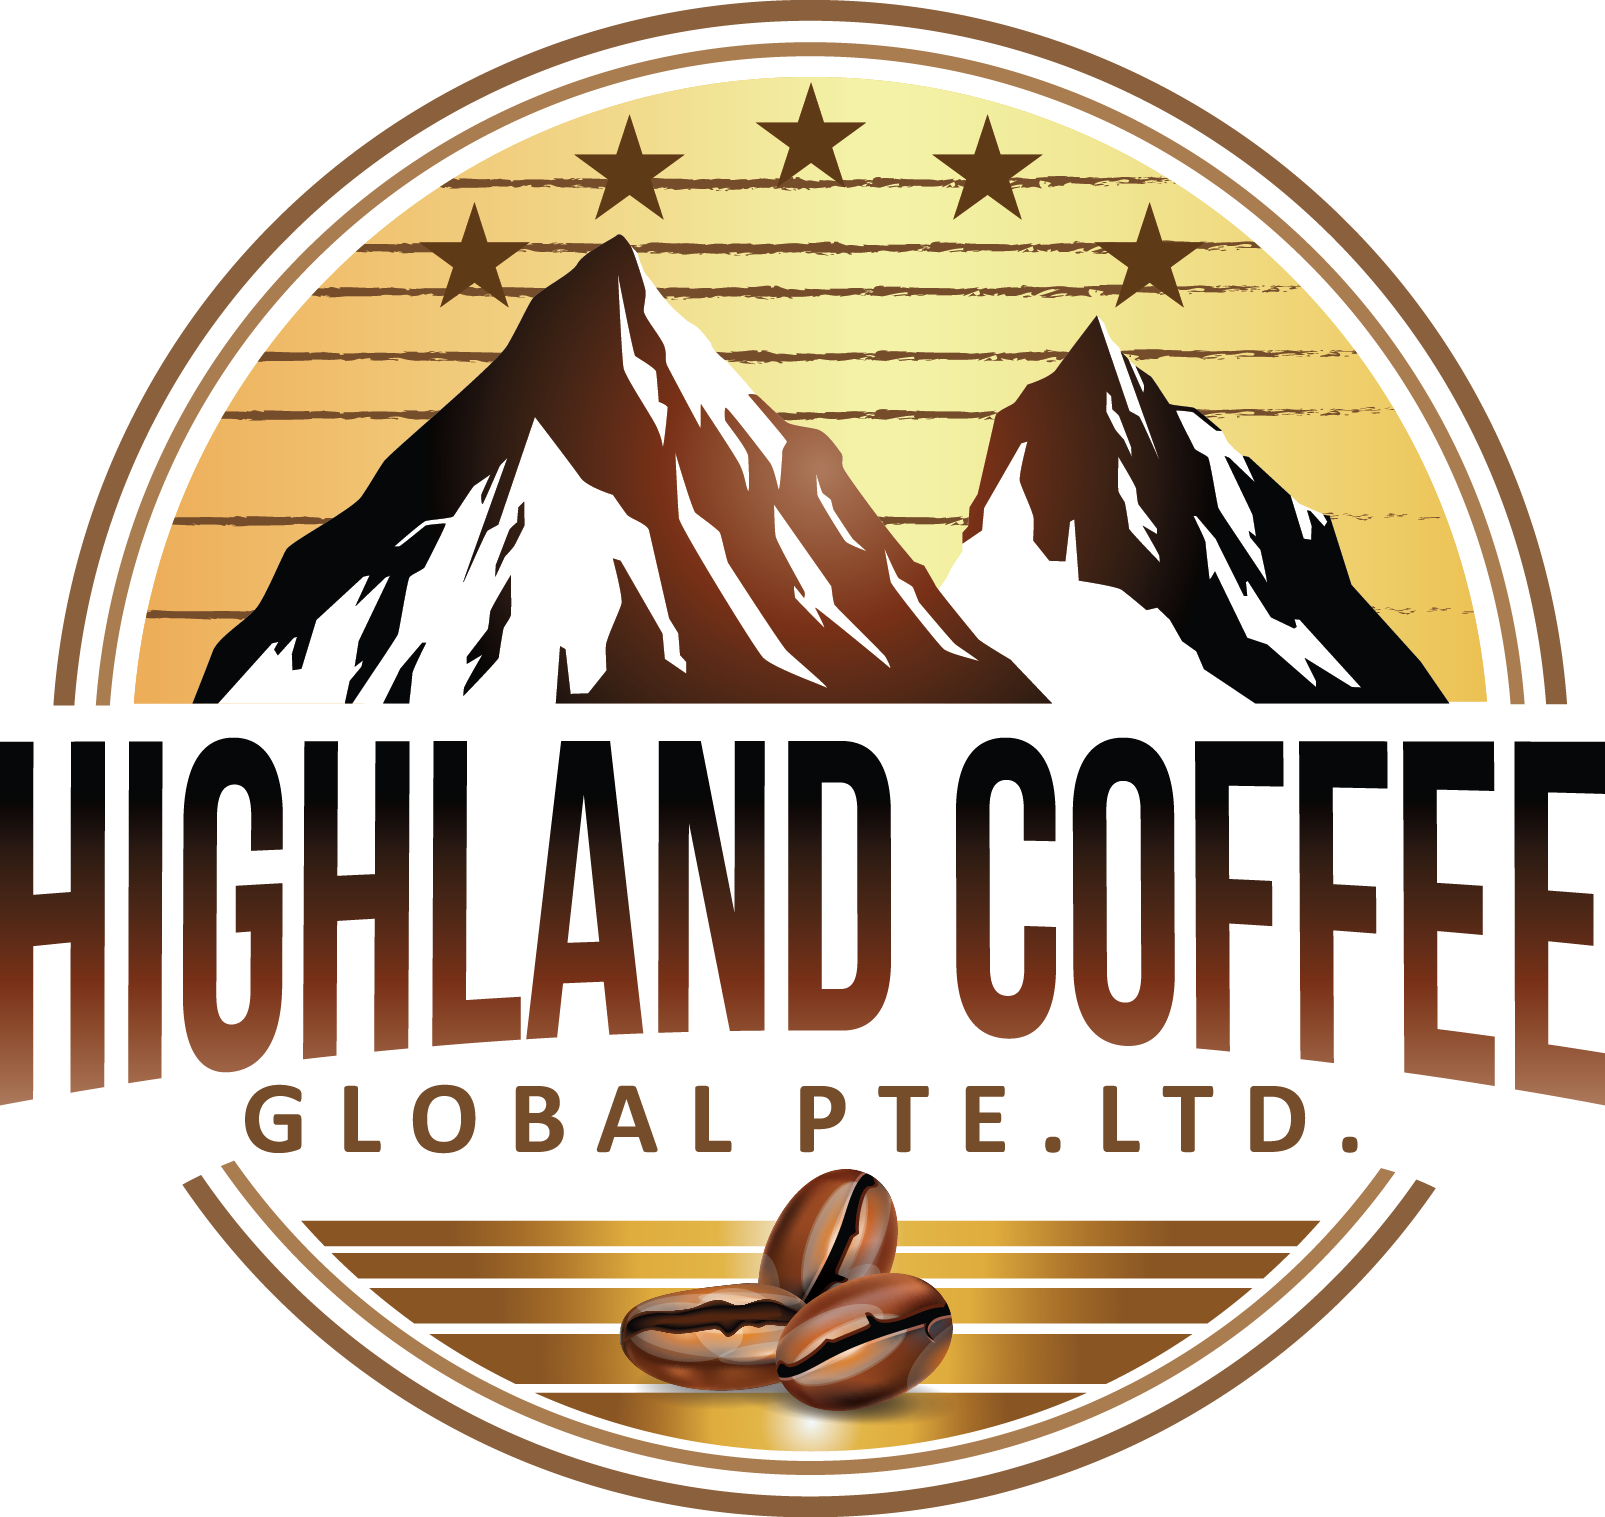 Highland Coffee Global Pte Ltd — Trading Coffee Beans Company